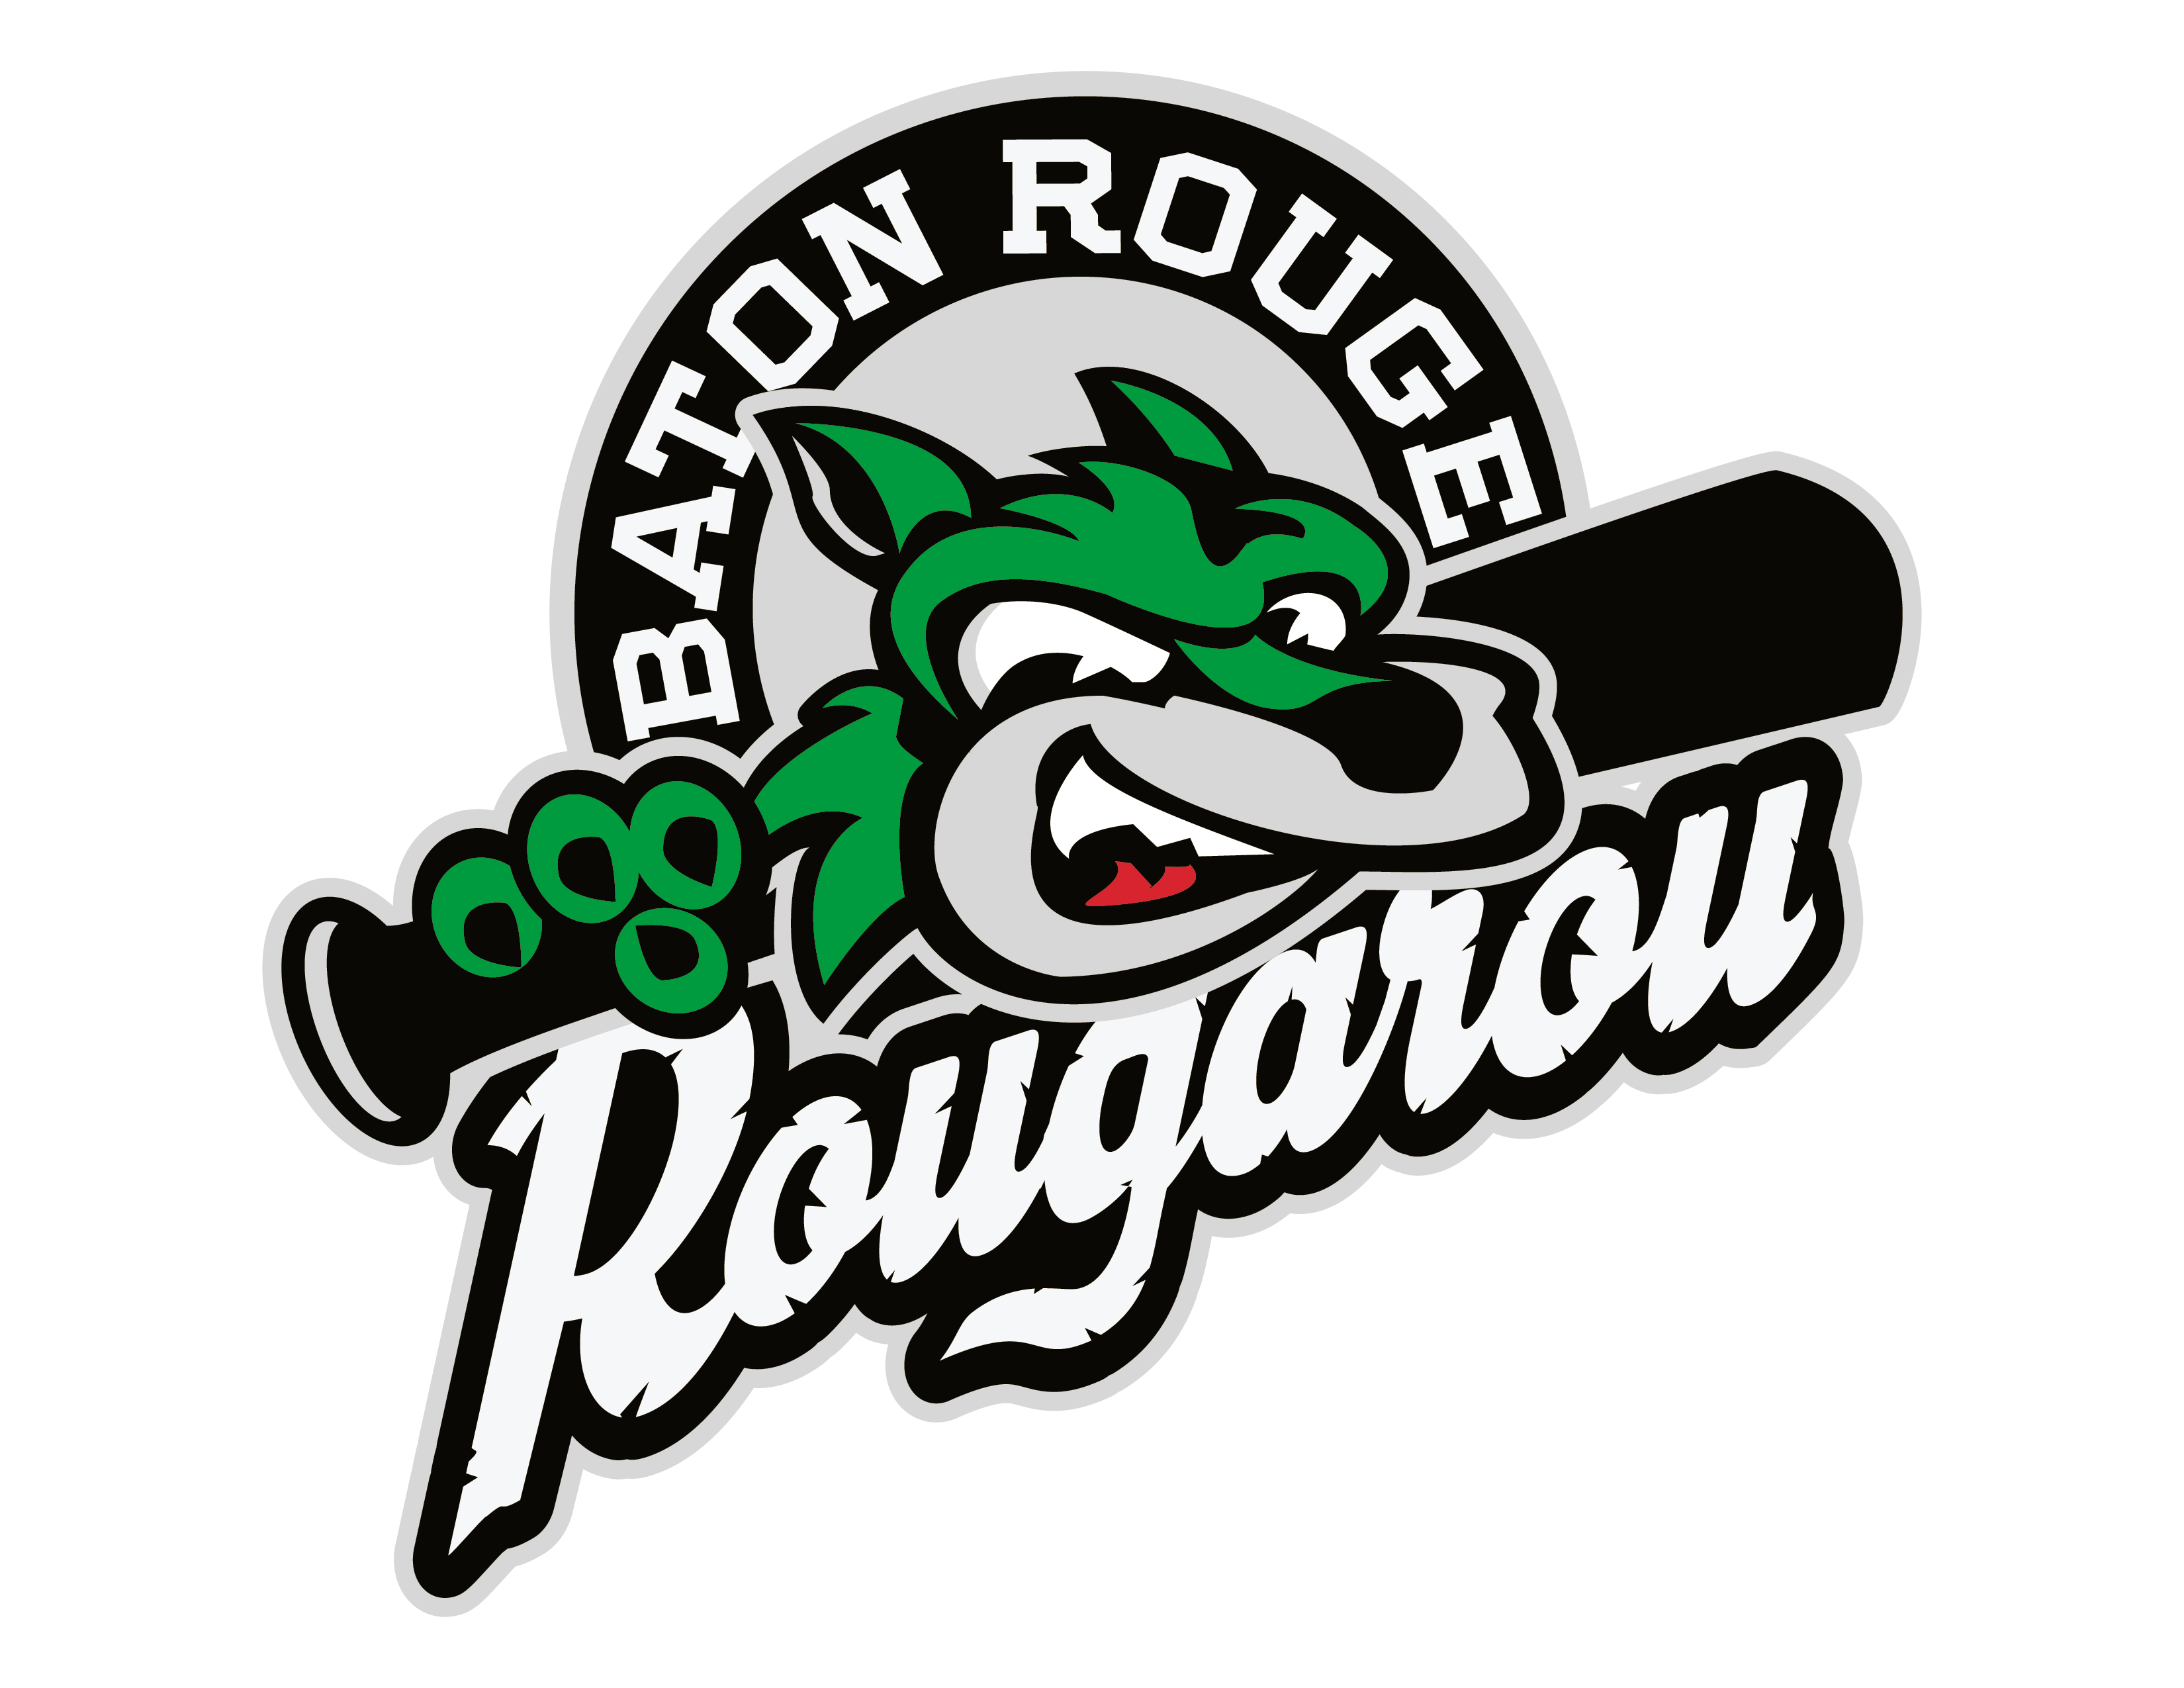 Baton Rouge Rougarou Logo